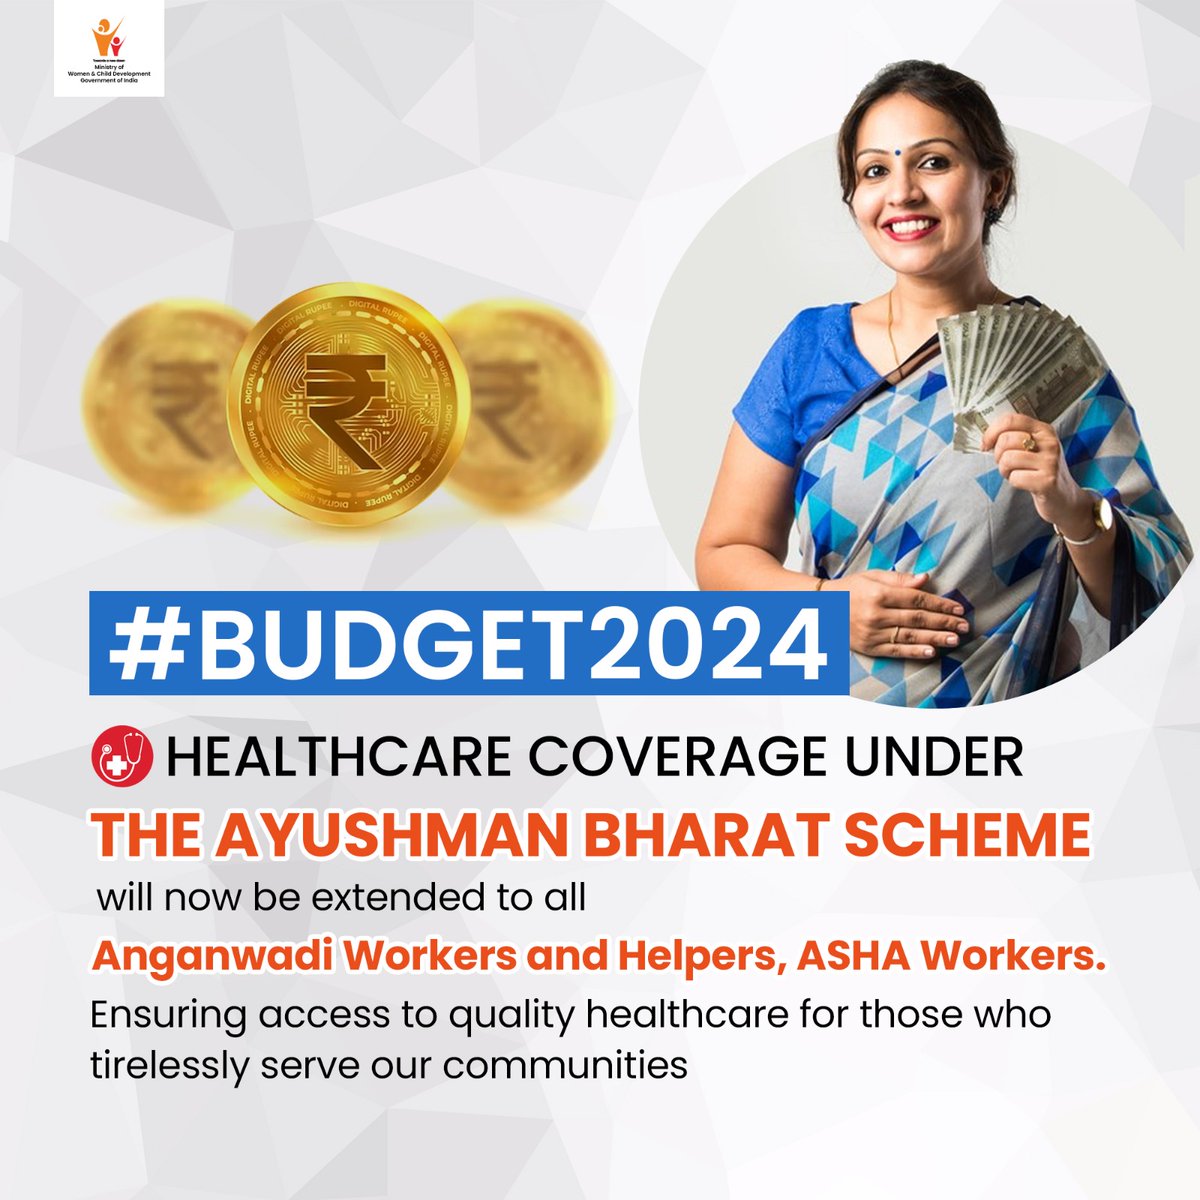 #Budget2024
.
.
.
#UnionBudget  
#UnionBudget2024 #ViksitBharatBudget
@PIBWCD